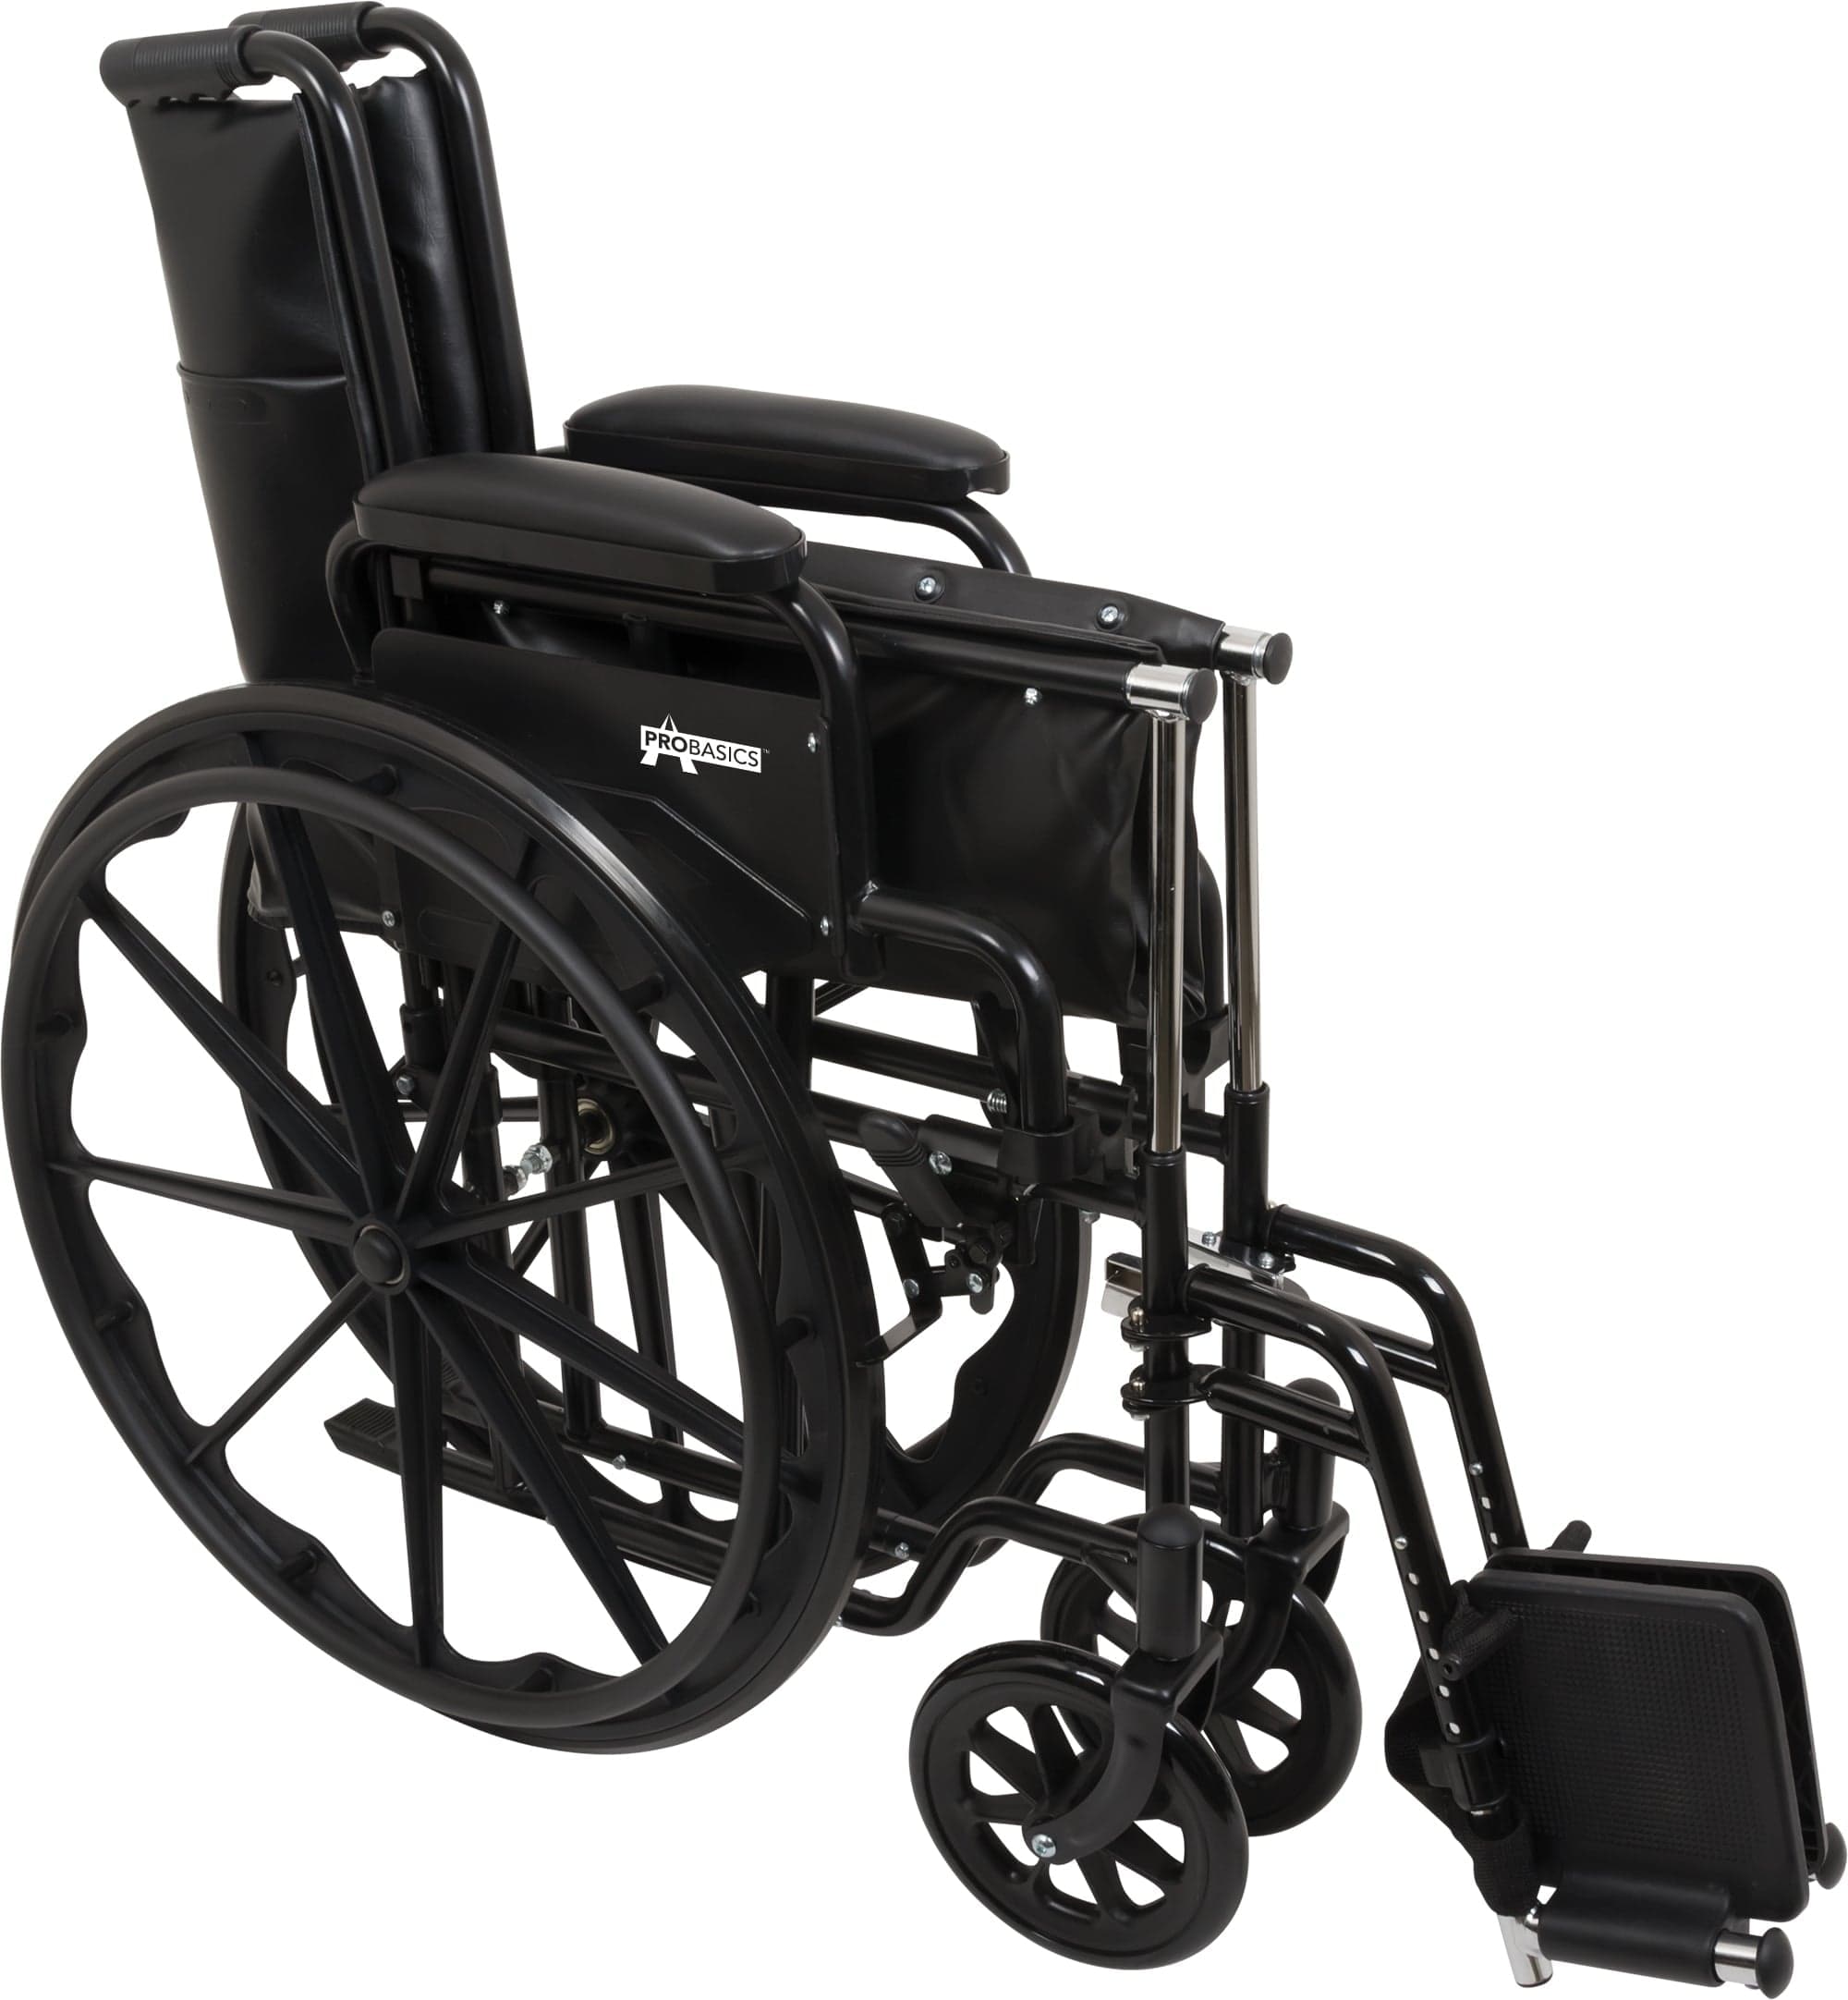 Compass Health K1 Wheelchairs Compass Health ProBasics K1 Lightweight Wheelchair with 20" x 16" Seat,